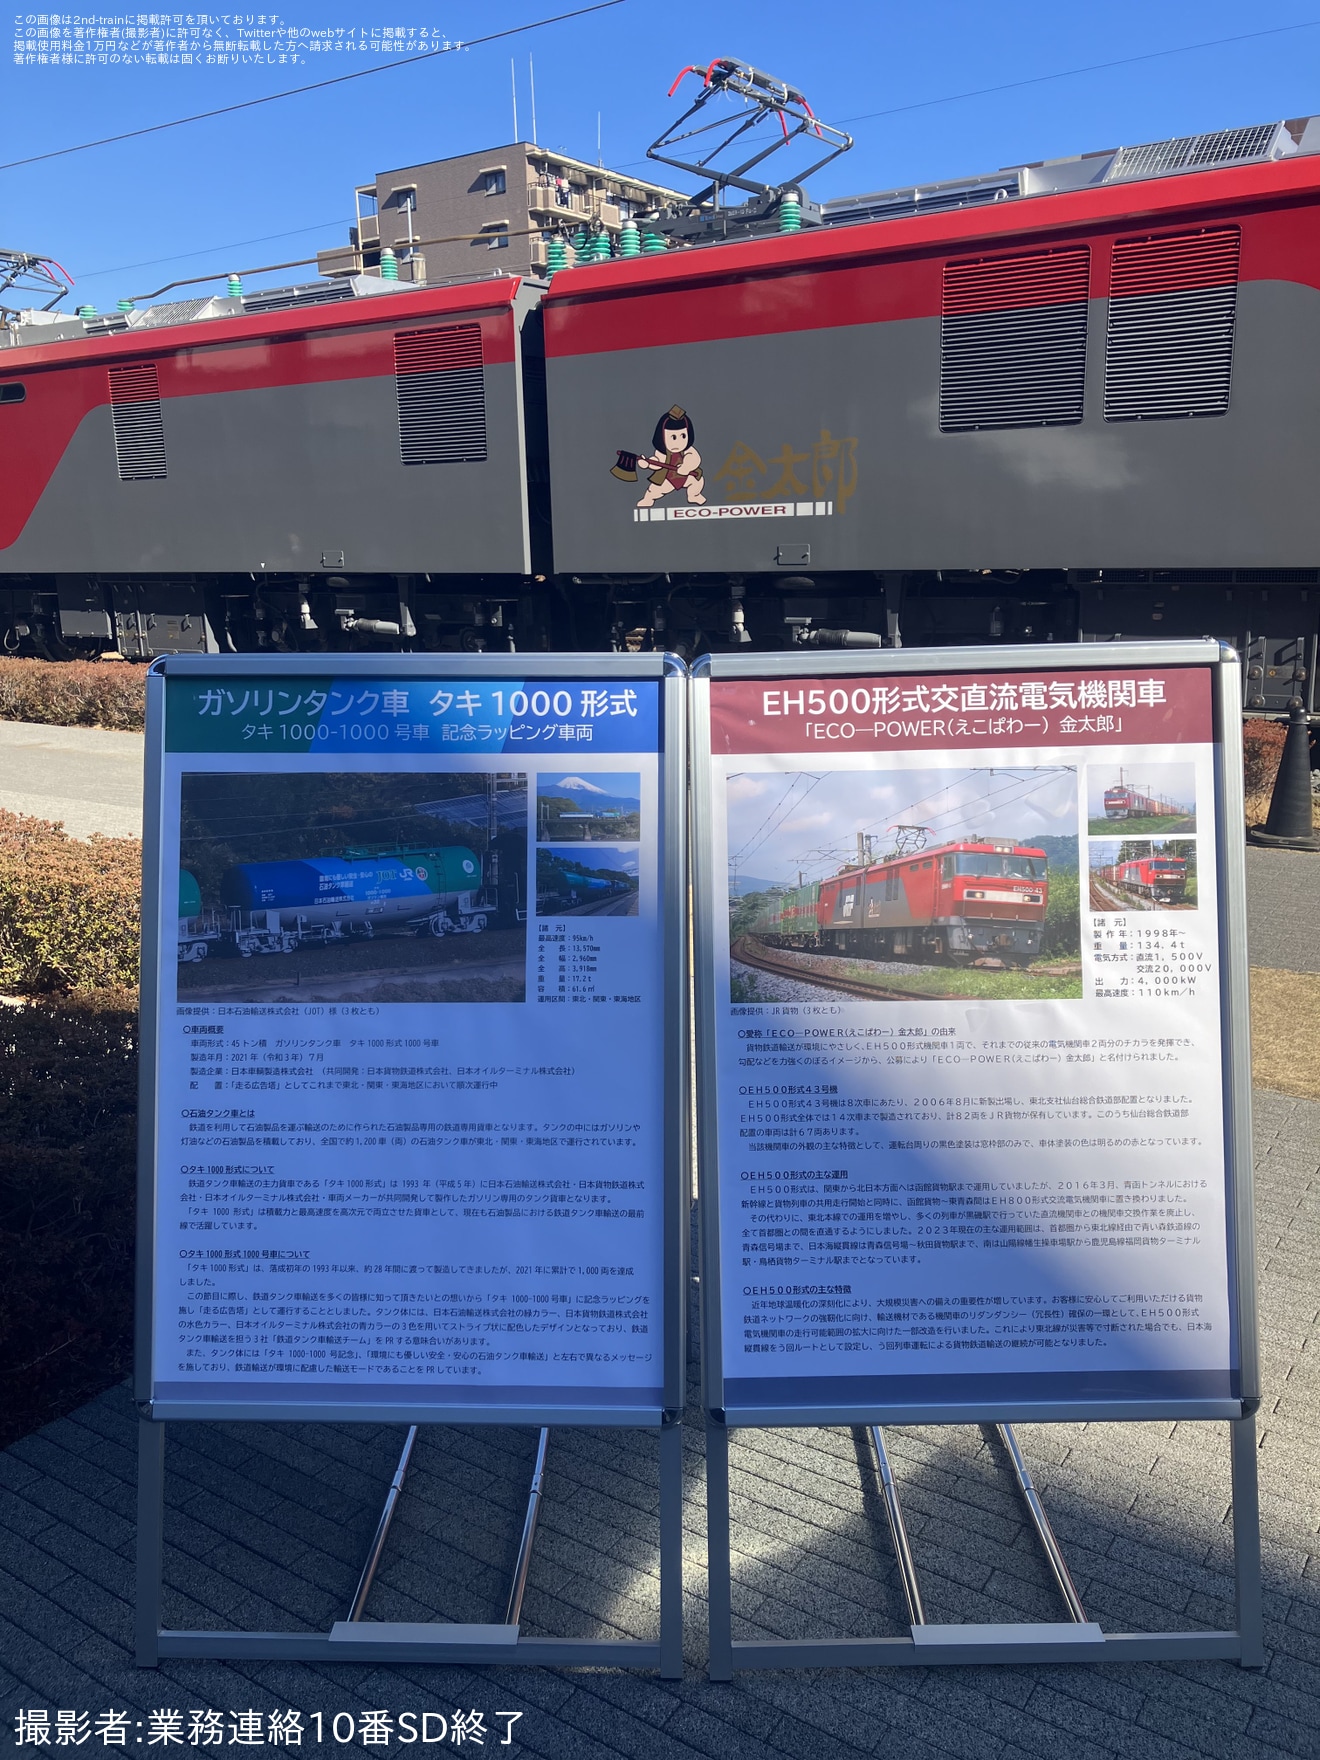 【JR貨】貨物鉄道輸送150年 車両展示が開催の拡大写真